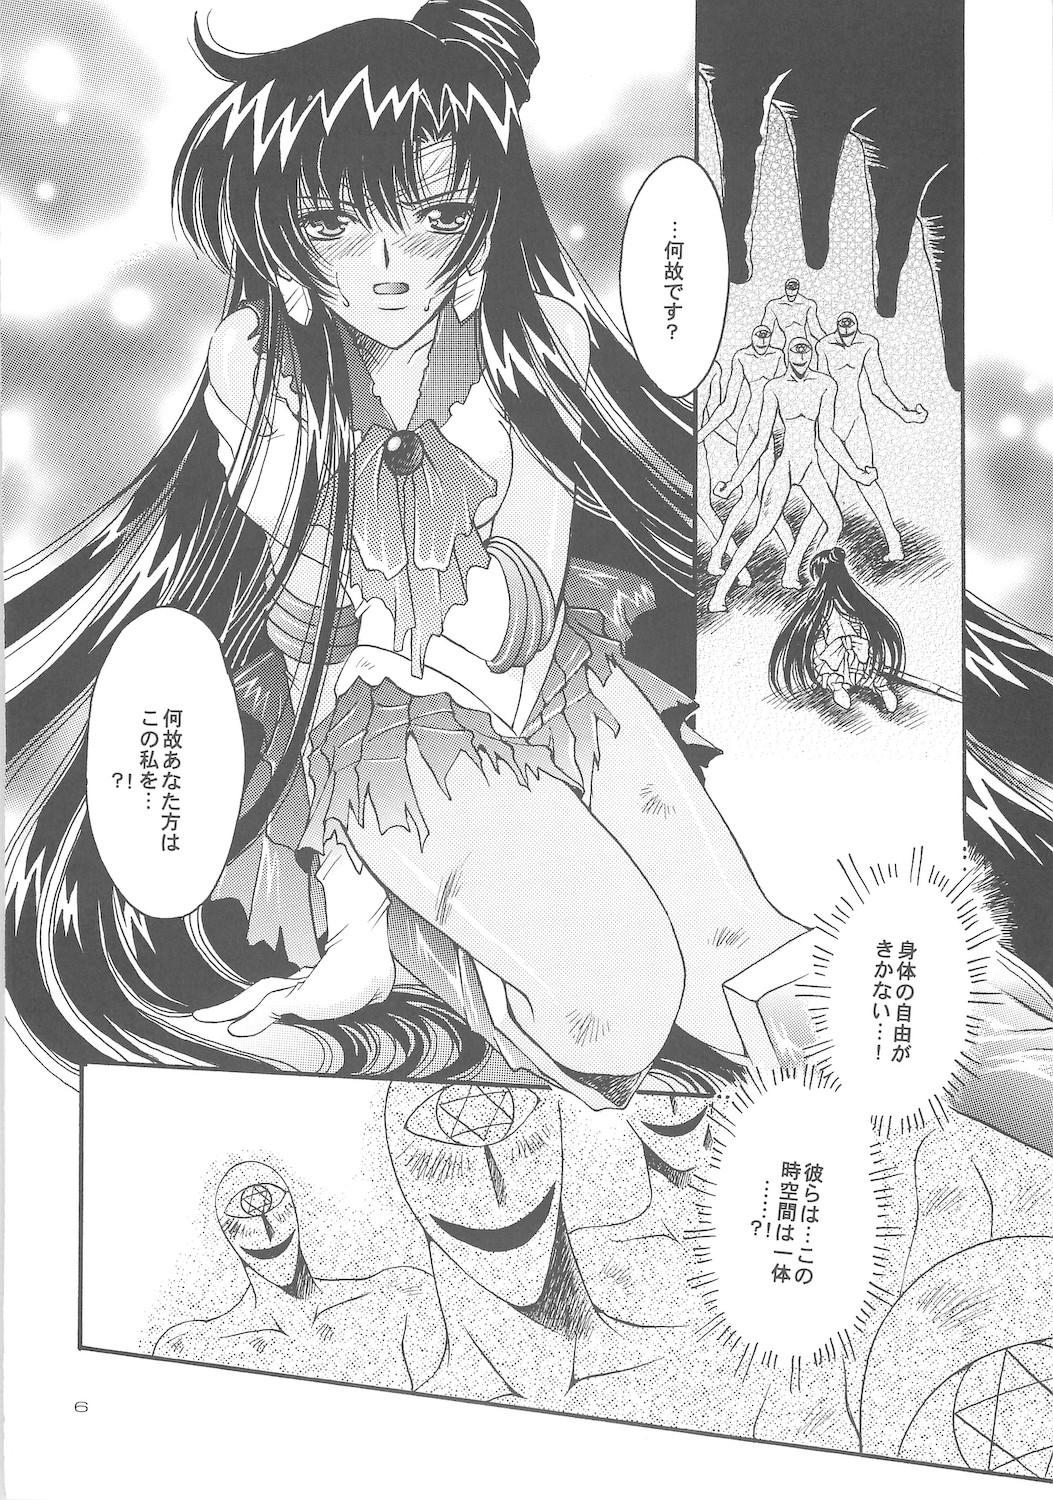 Arab Owaru Sekai dai 4 shou - Sailor moon Trio - Page 6